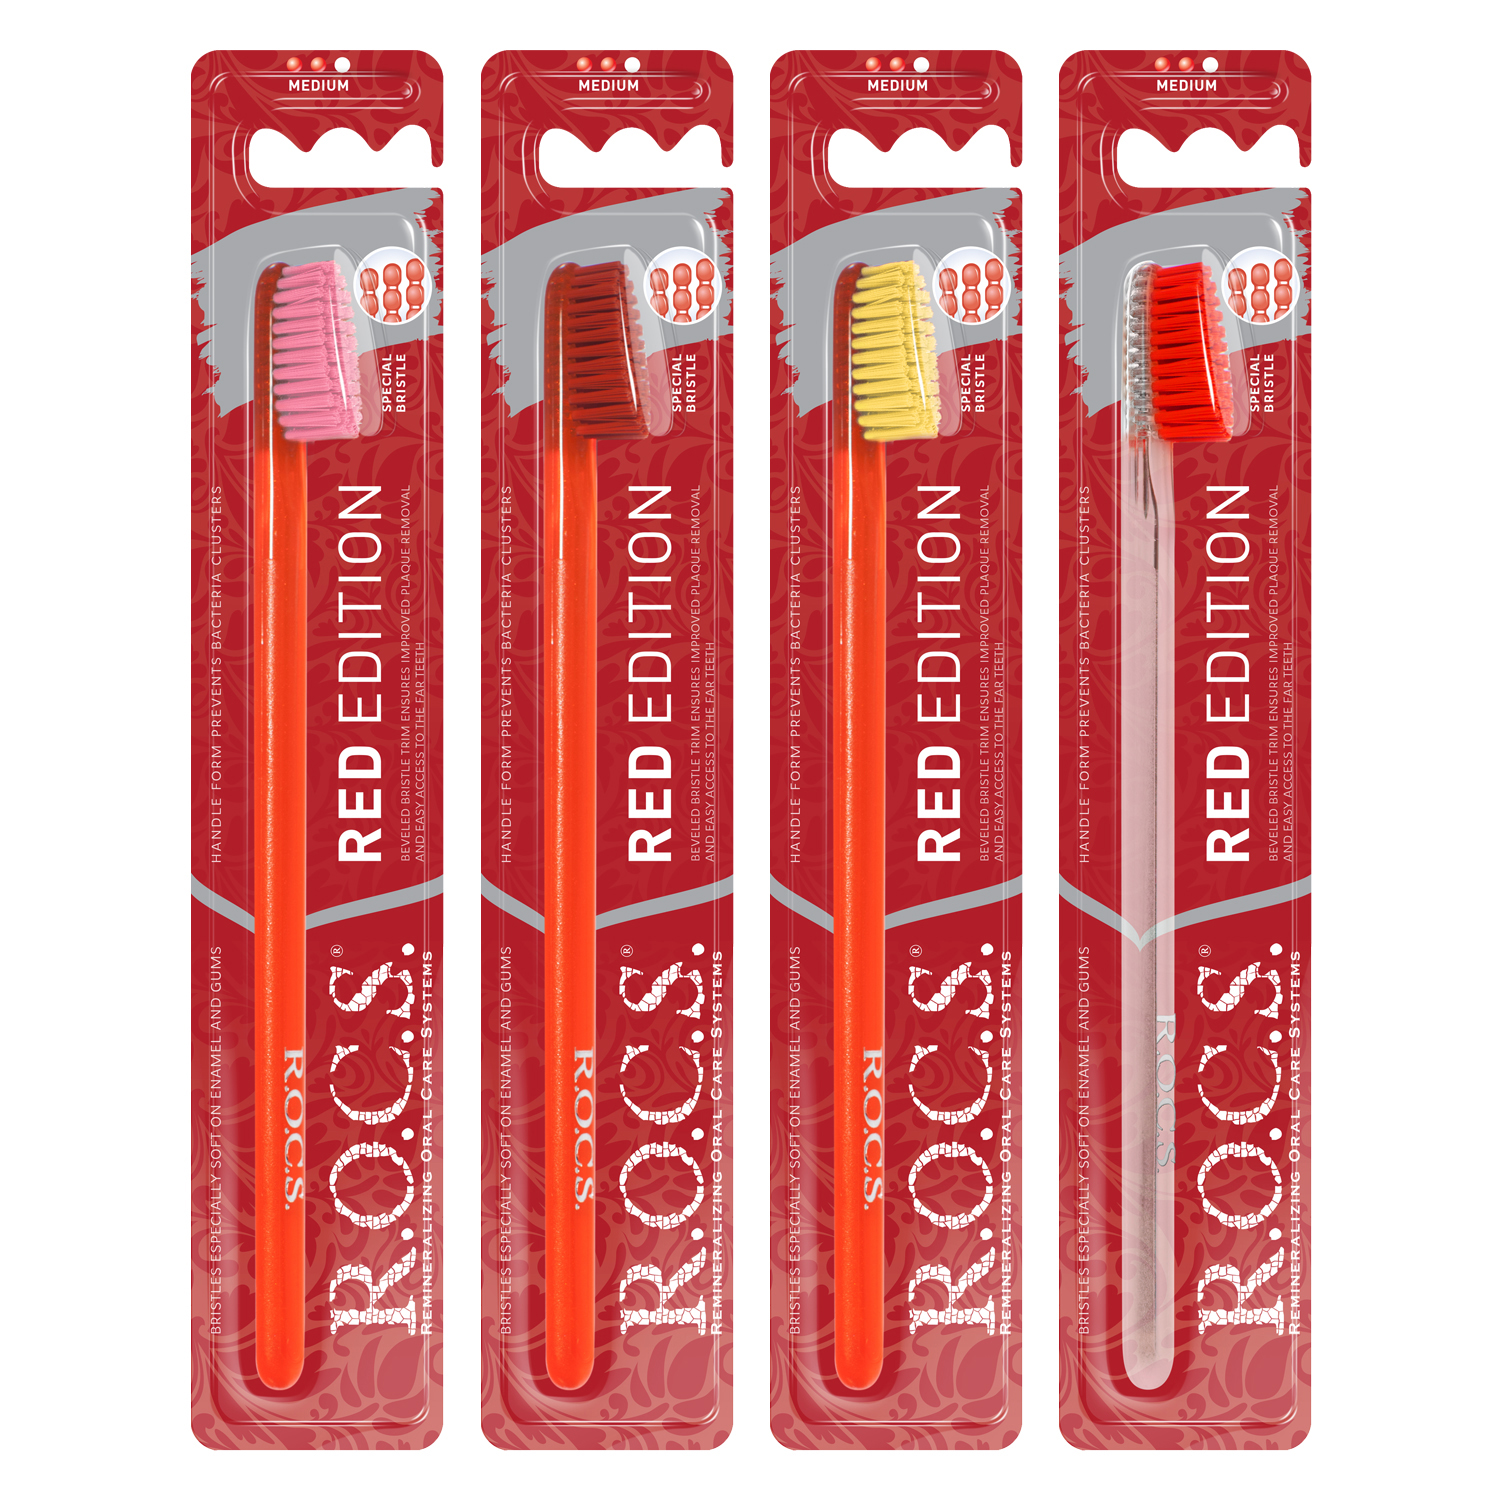 R.O.C.S. Red Edition medium Toothbrush Hammasharja